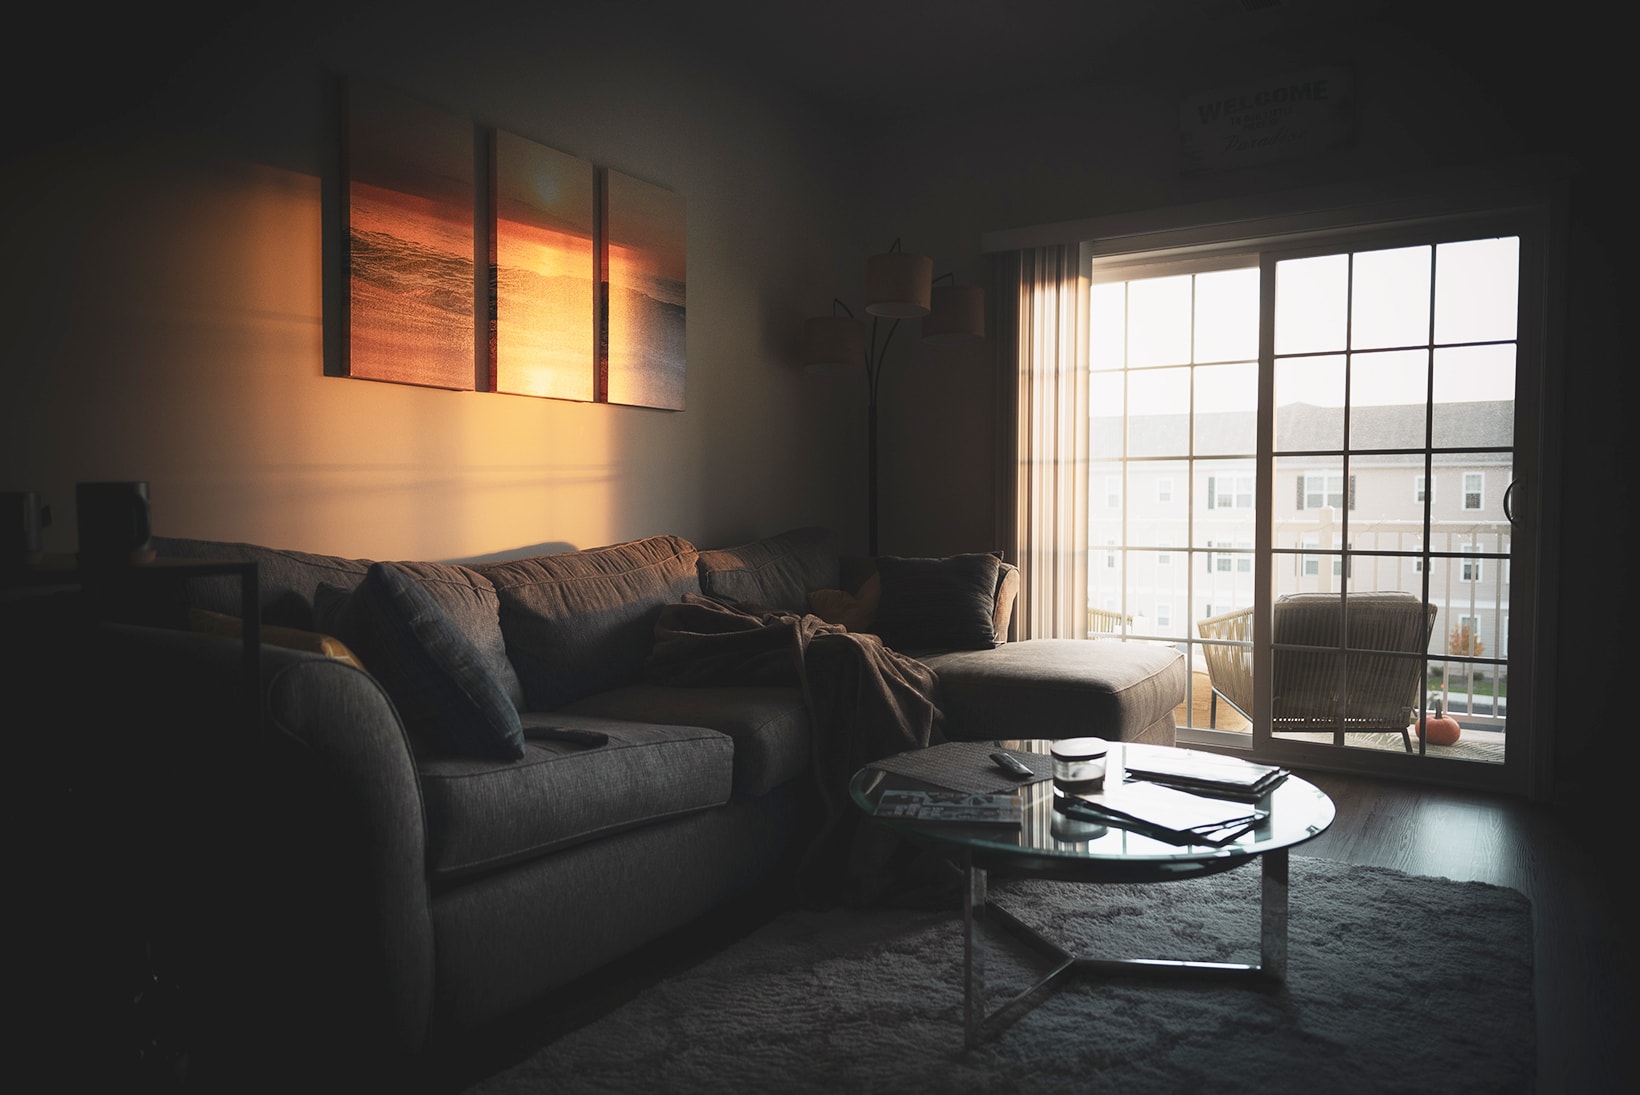 Social Distancing Quarantine Self Isolation Home Living Room Sofa Window Painting Sunset Sunrise